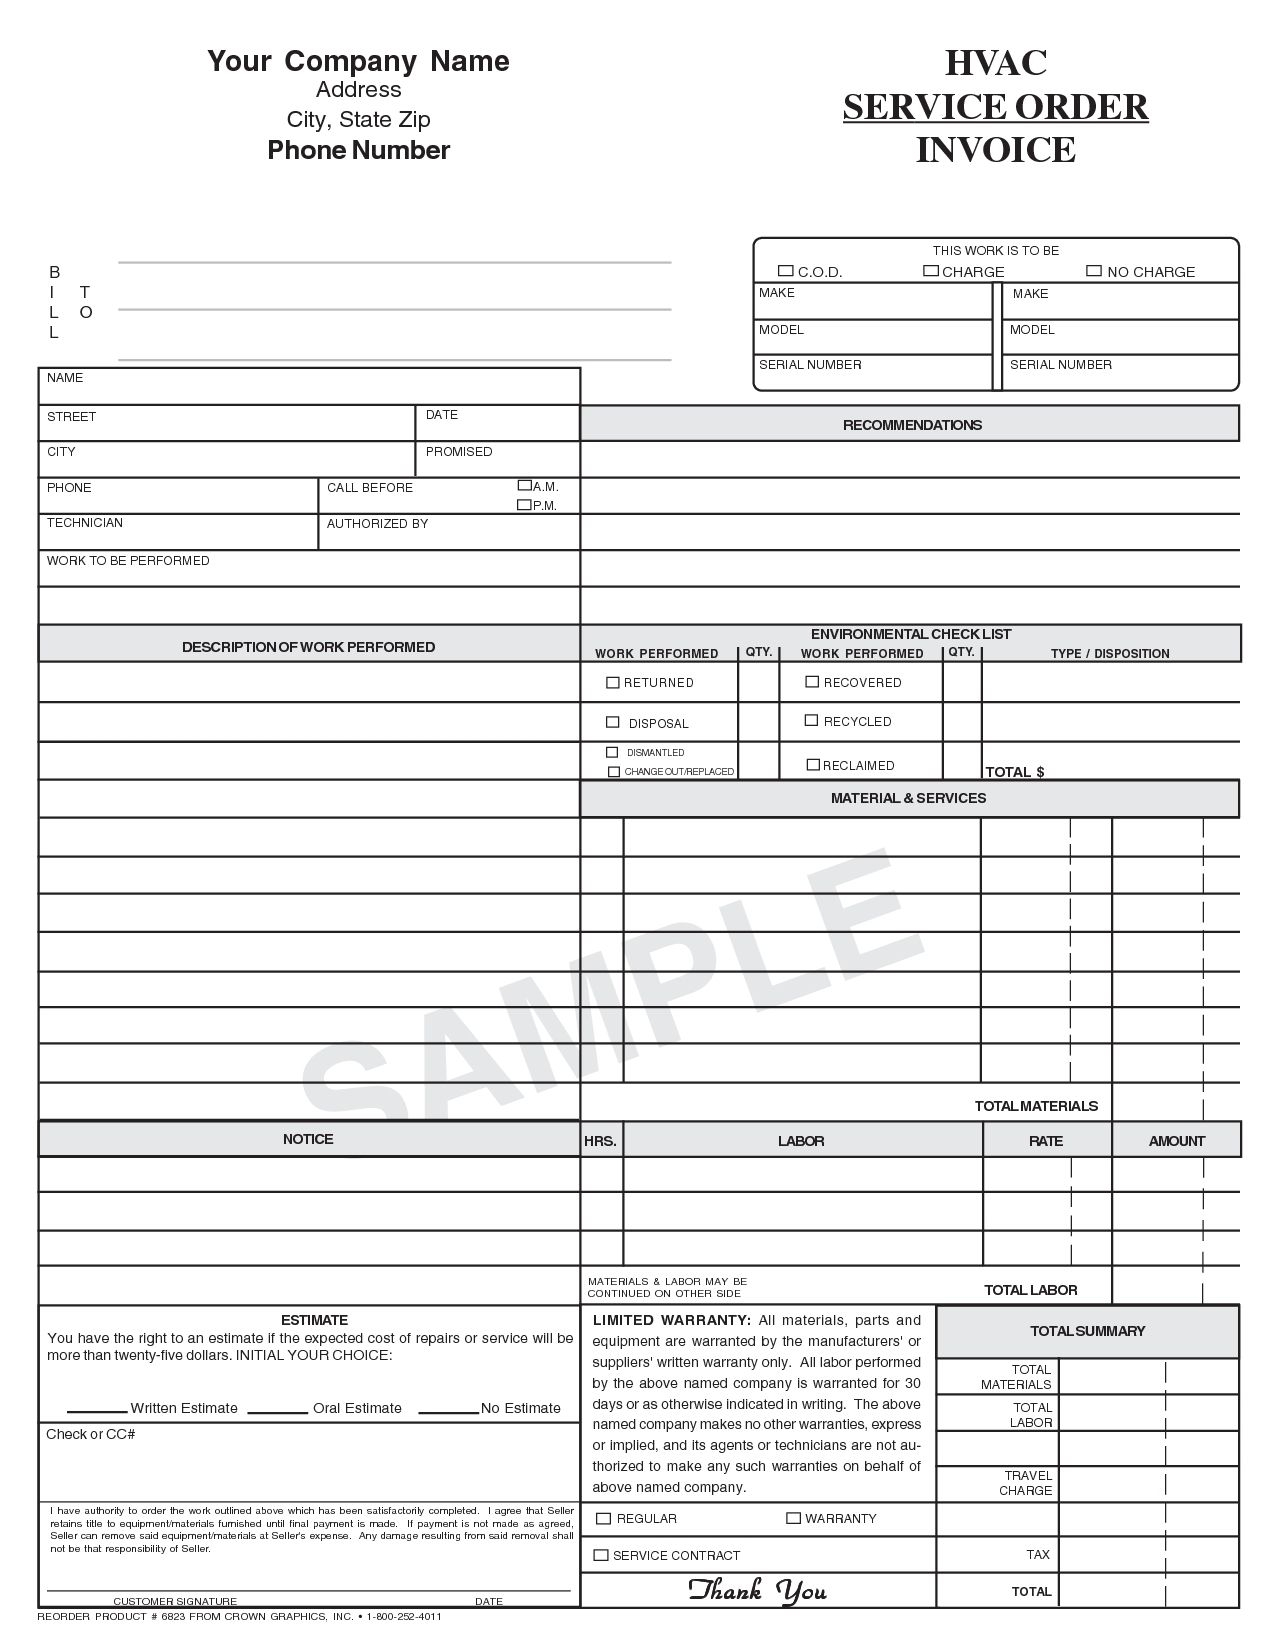 free hvac invoice template free invoice template hvac hvac work order forms